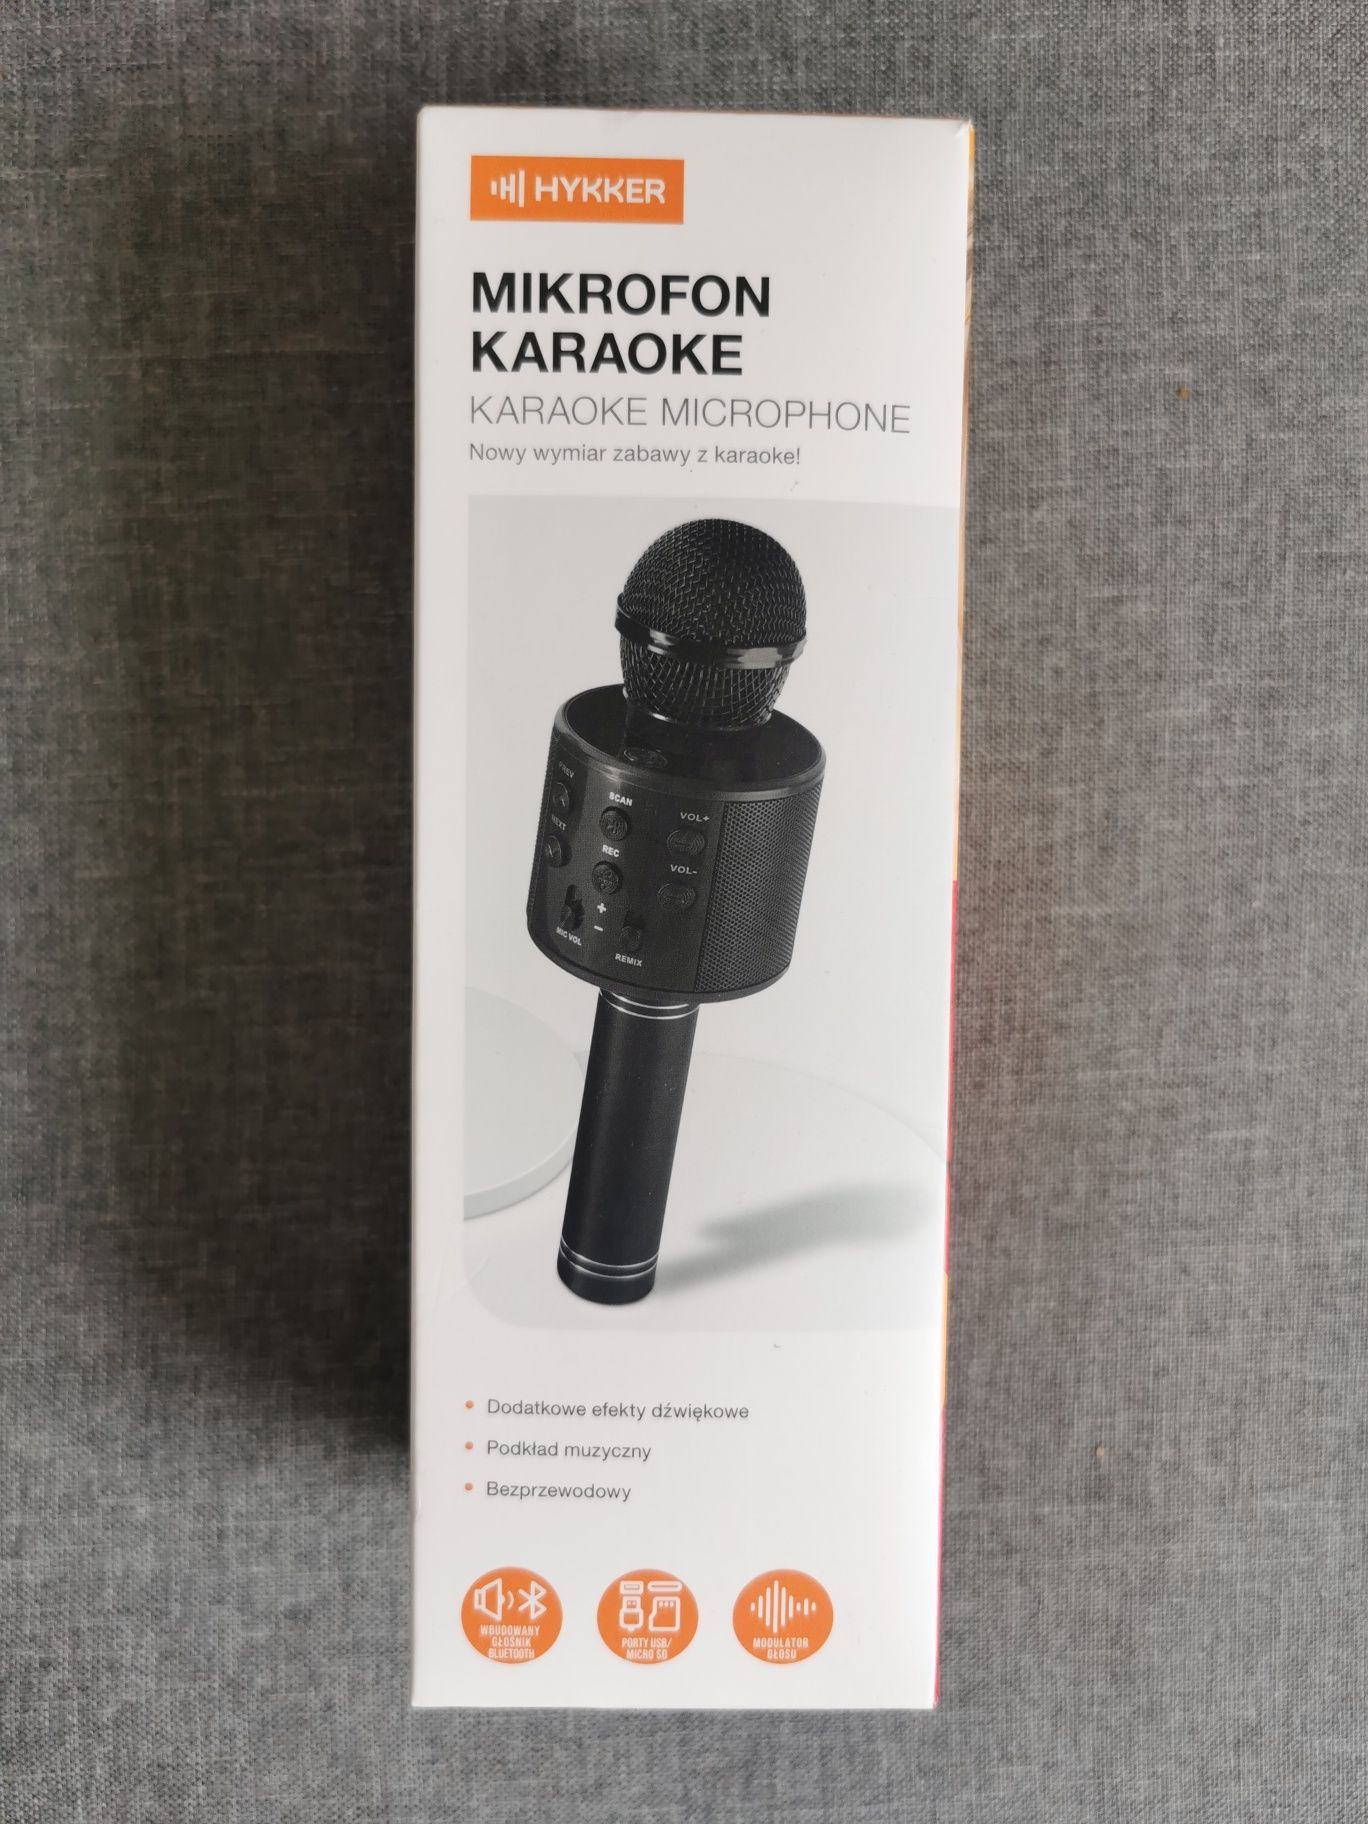 Hykker mikrofon karaoke + mikser głosu